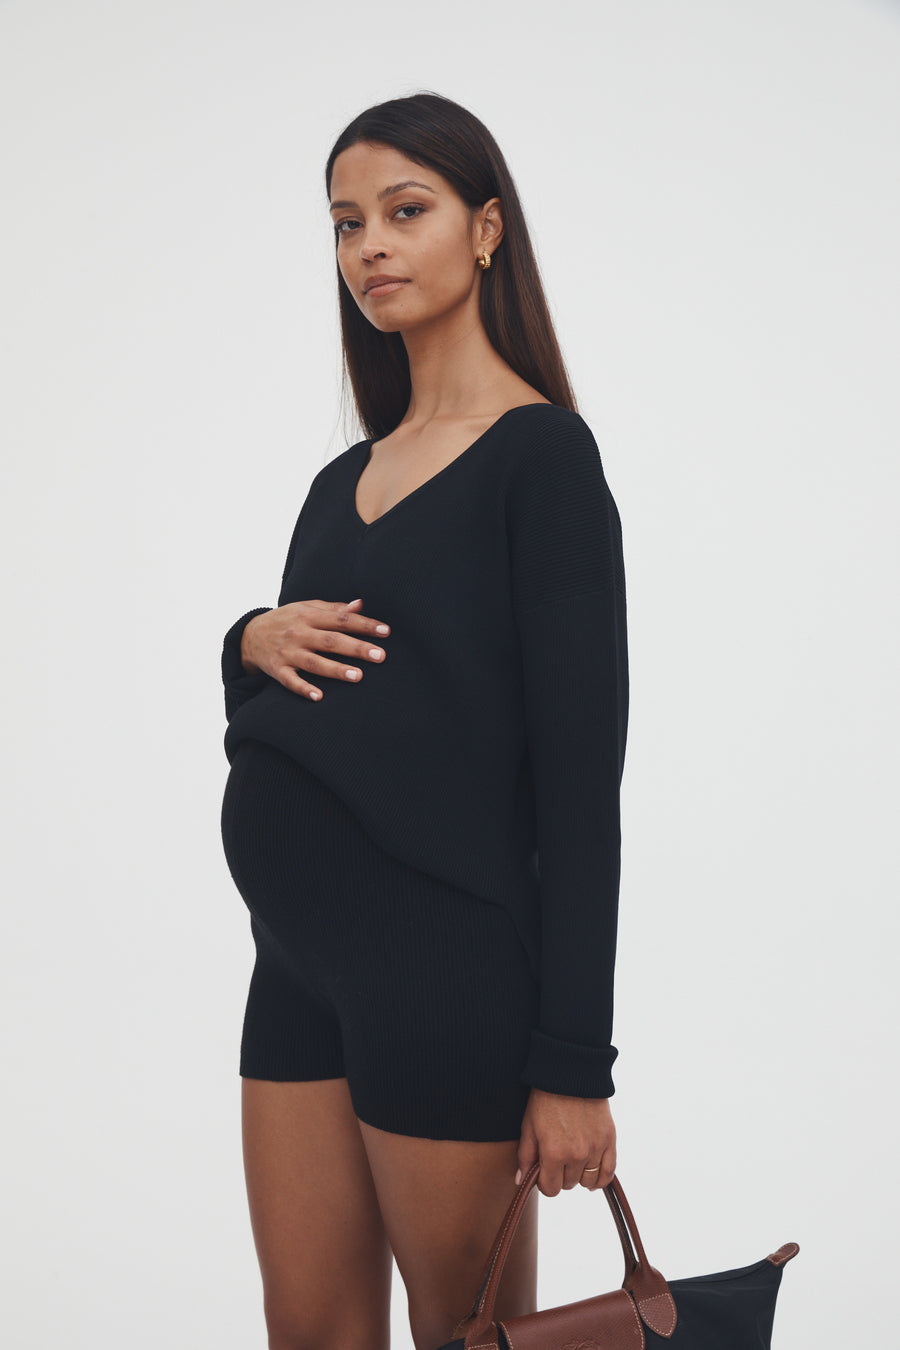 Overbump Stretchy Rib Maternity Shorts (Black) 7